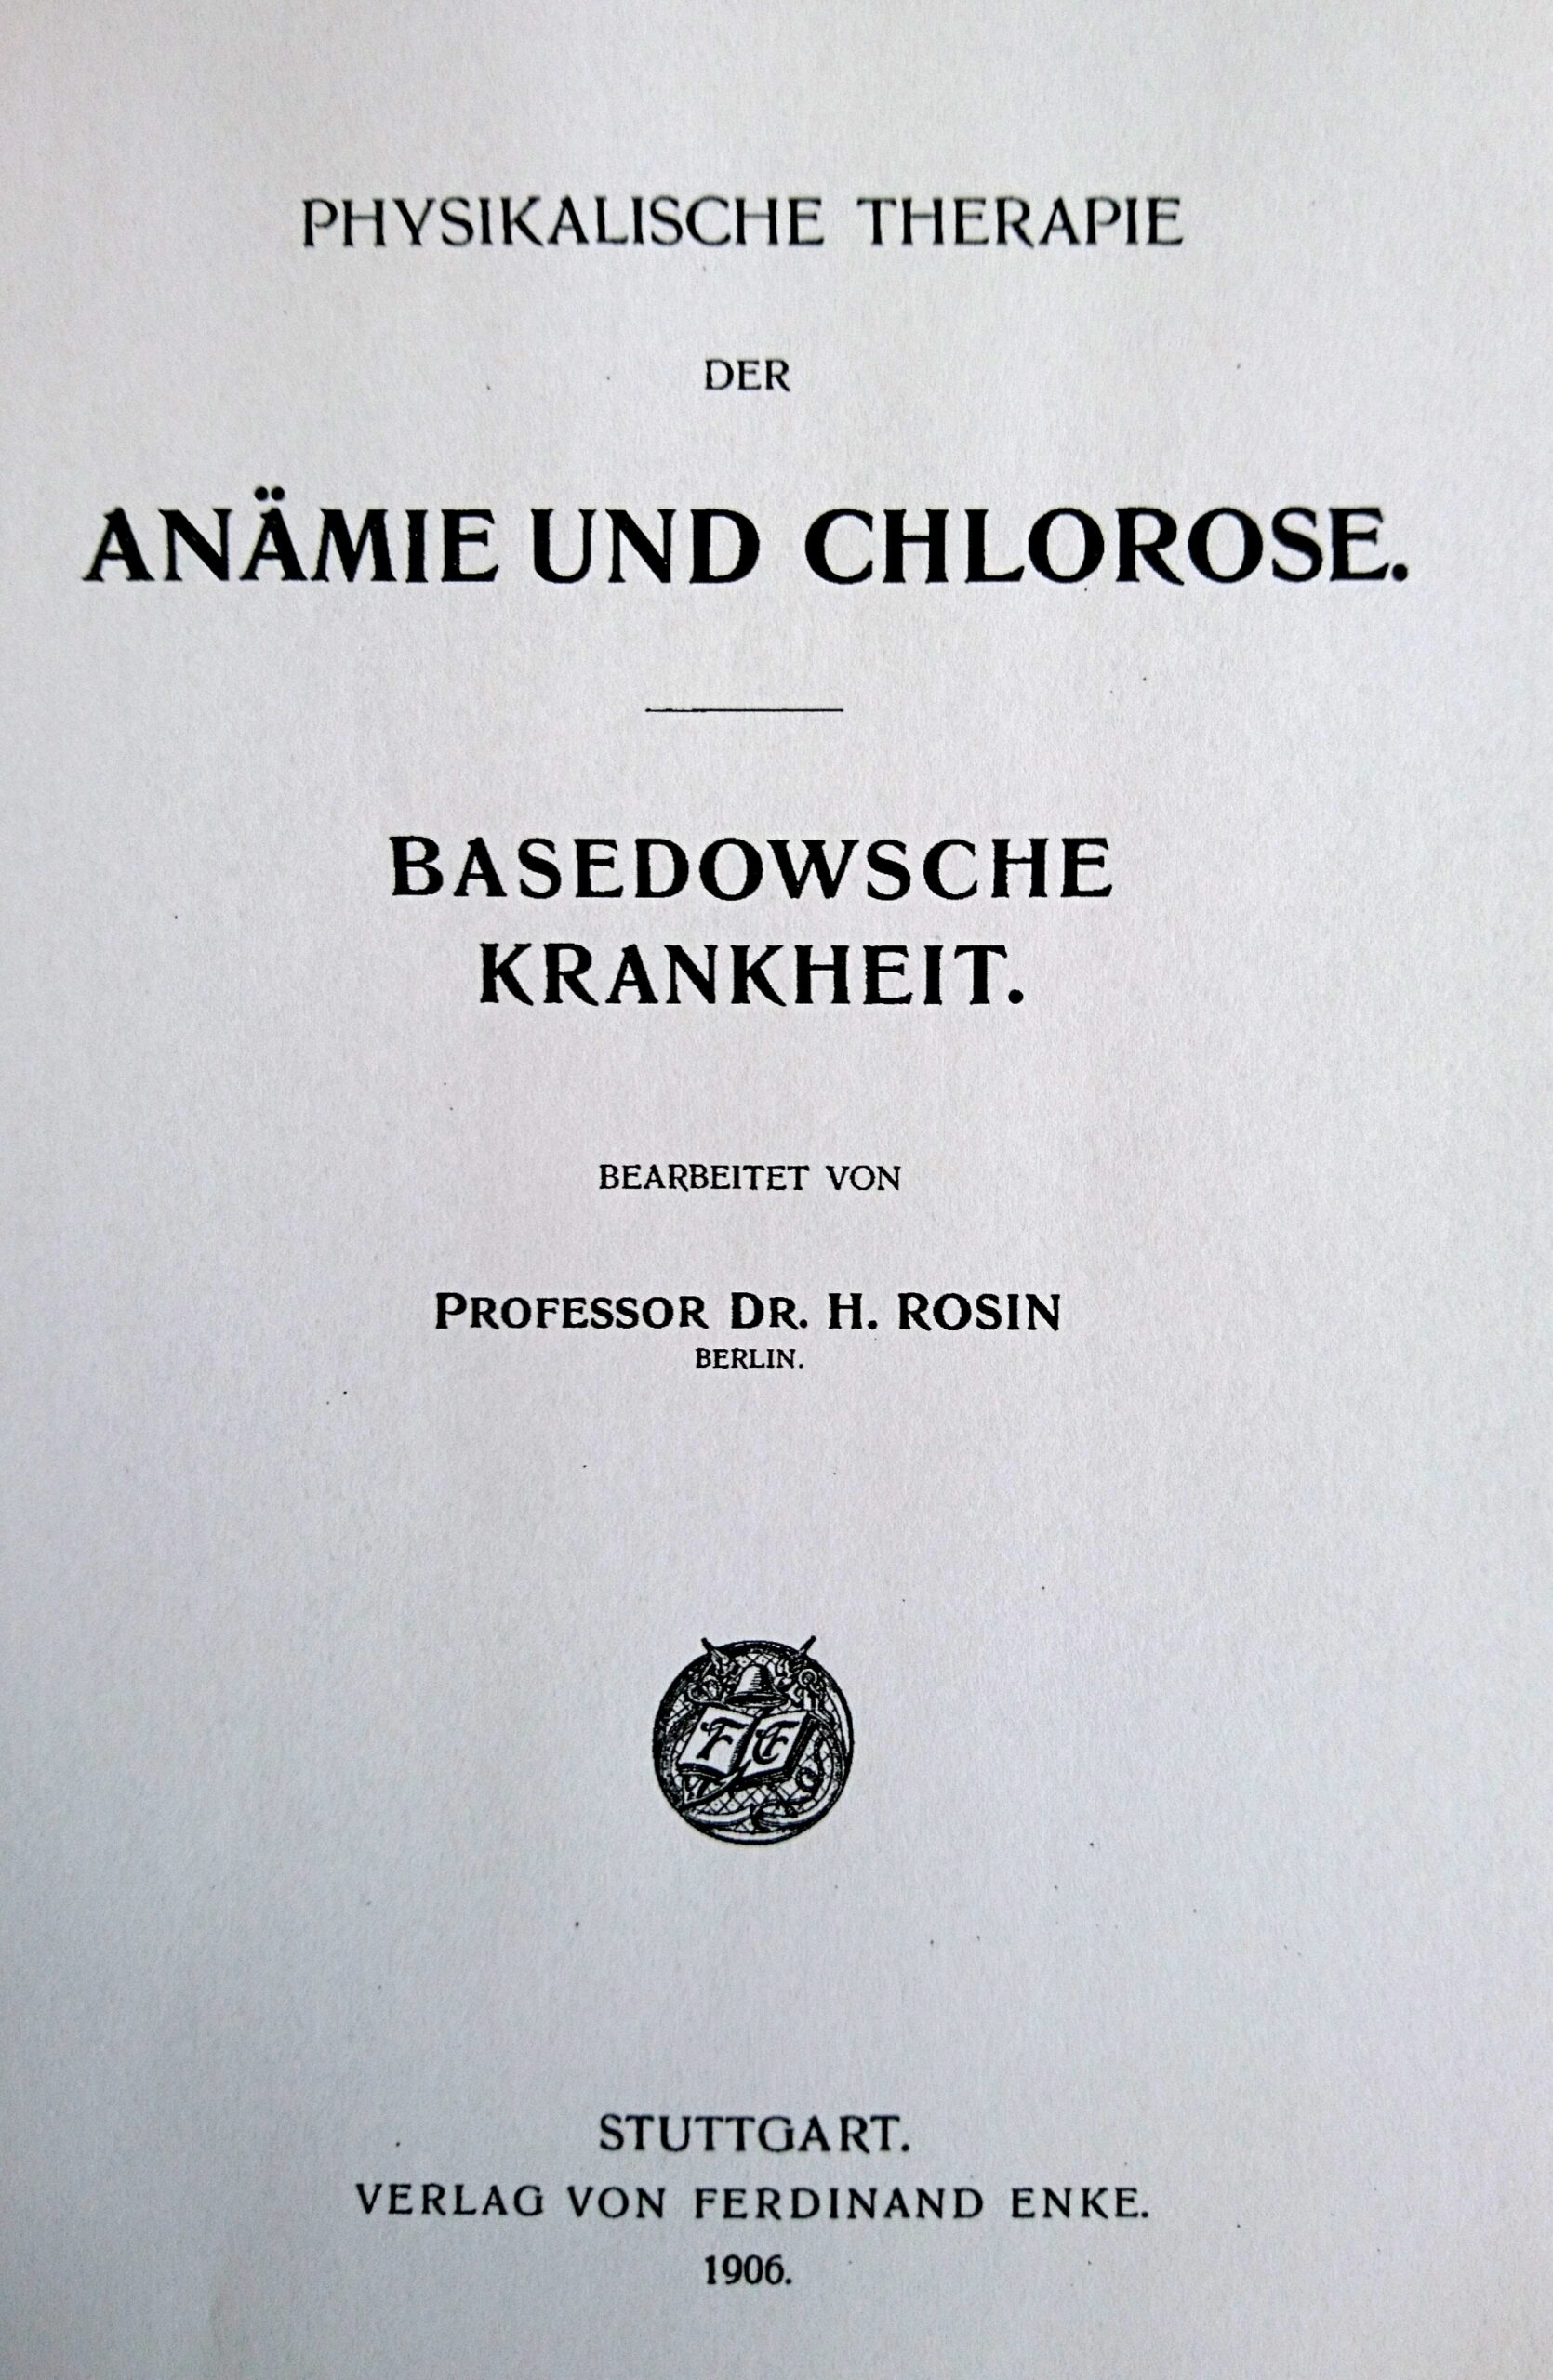 H. Rosin, Anämie u. Chlorose. - Basedowsche Krankheit. 1906

